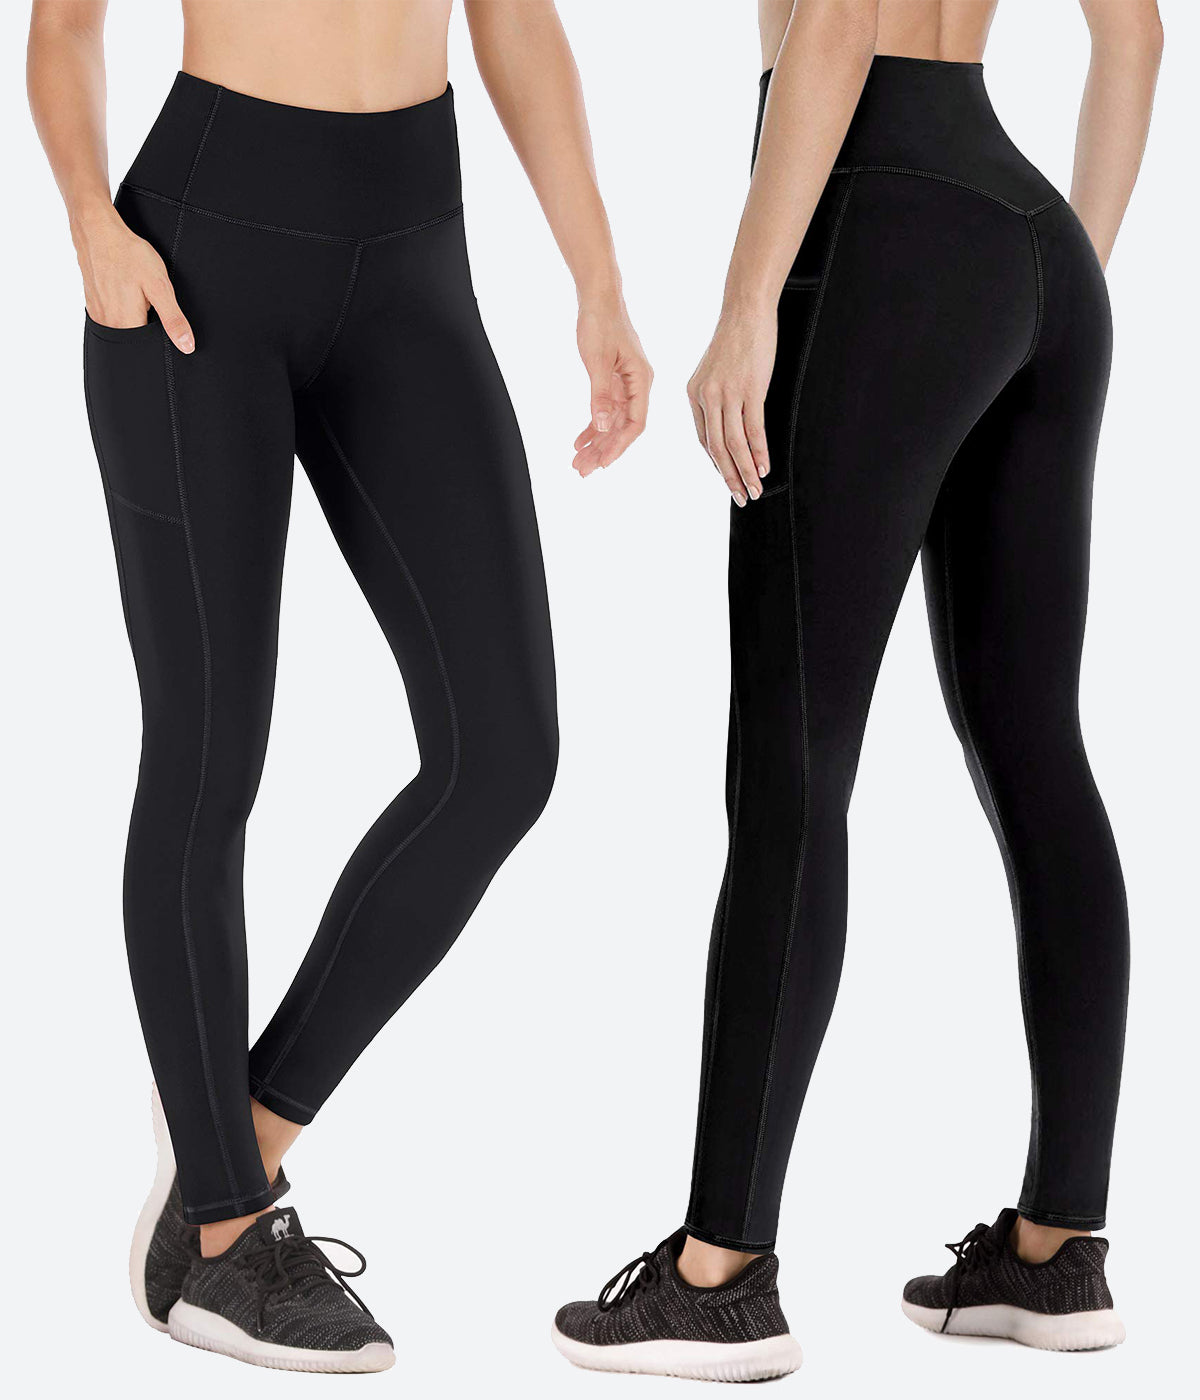  Hi Clasmix 2 Pack Fleece Lined Leggings Women-High Waisted  Tummy Control Seamless Winter Thermal Warm Workout Yoga PantsBlack+Grey